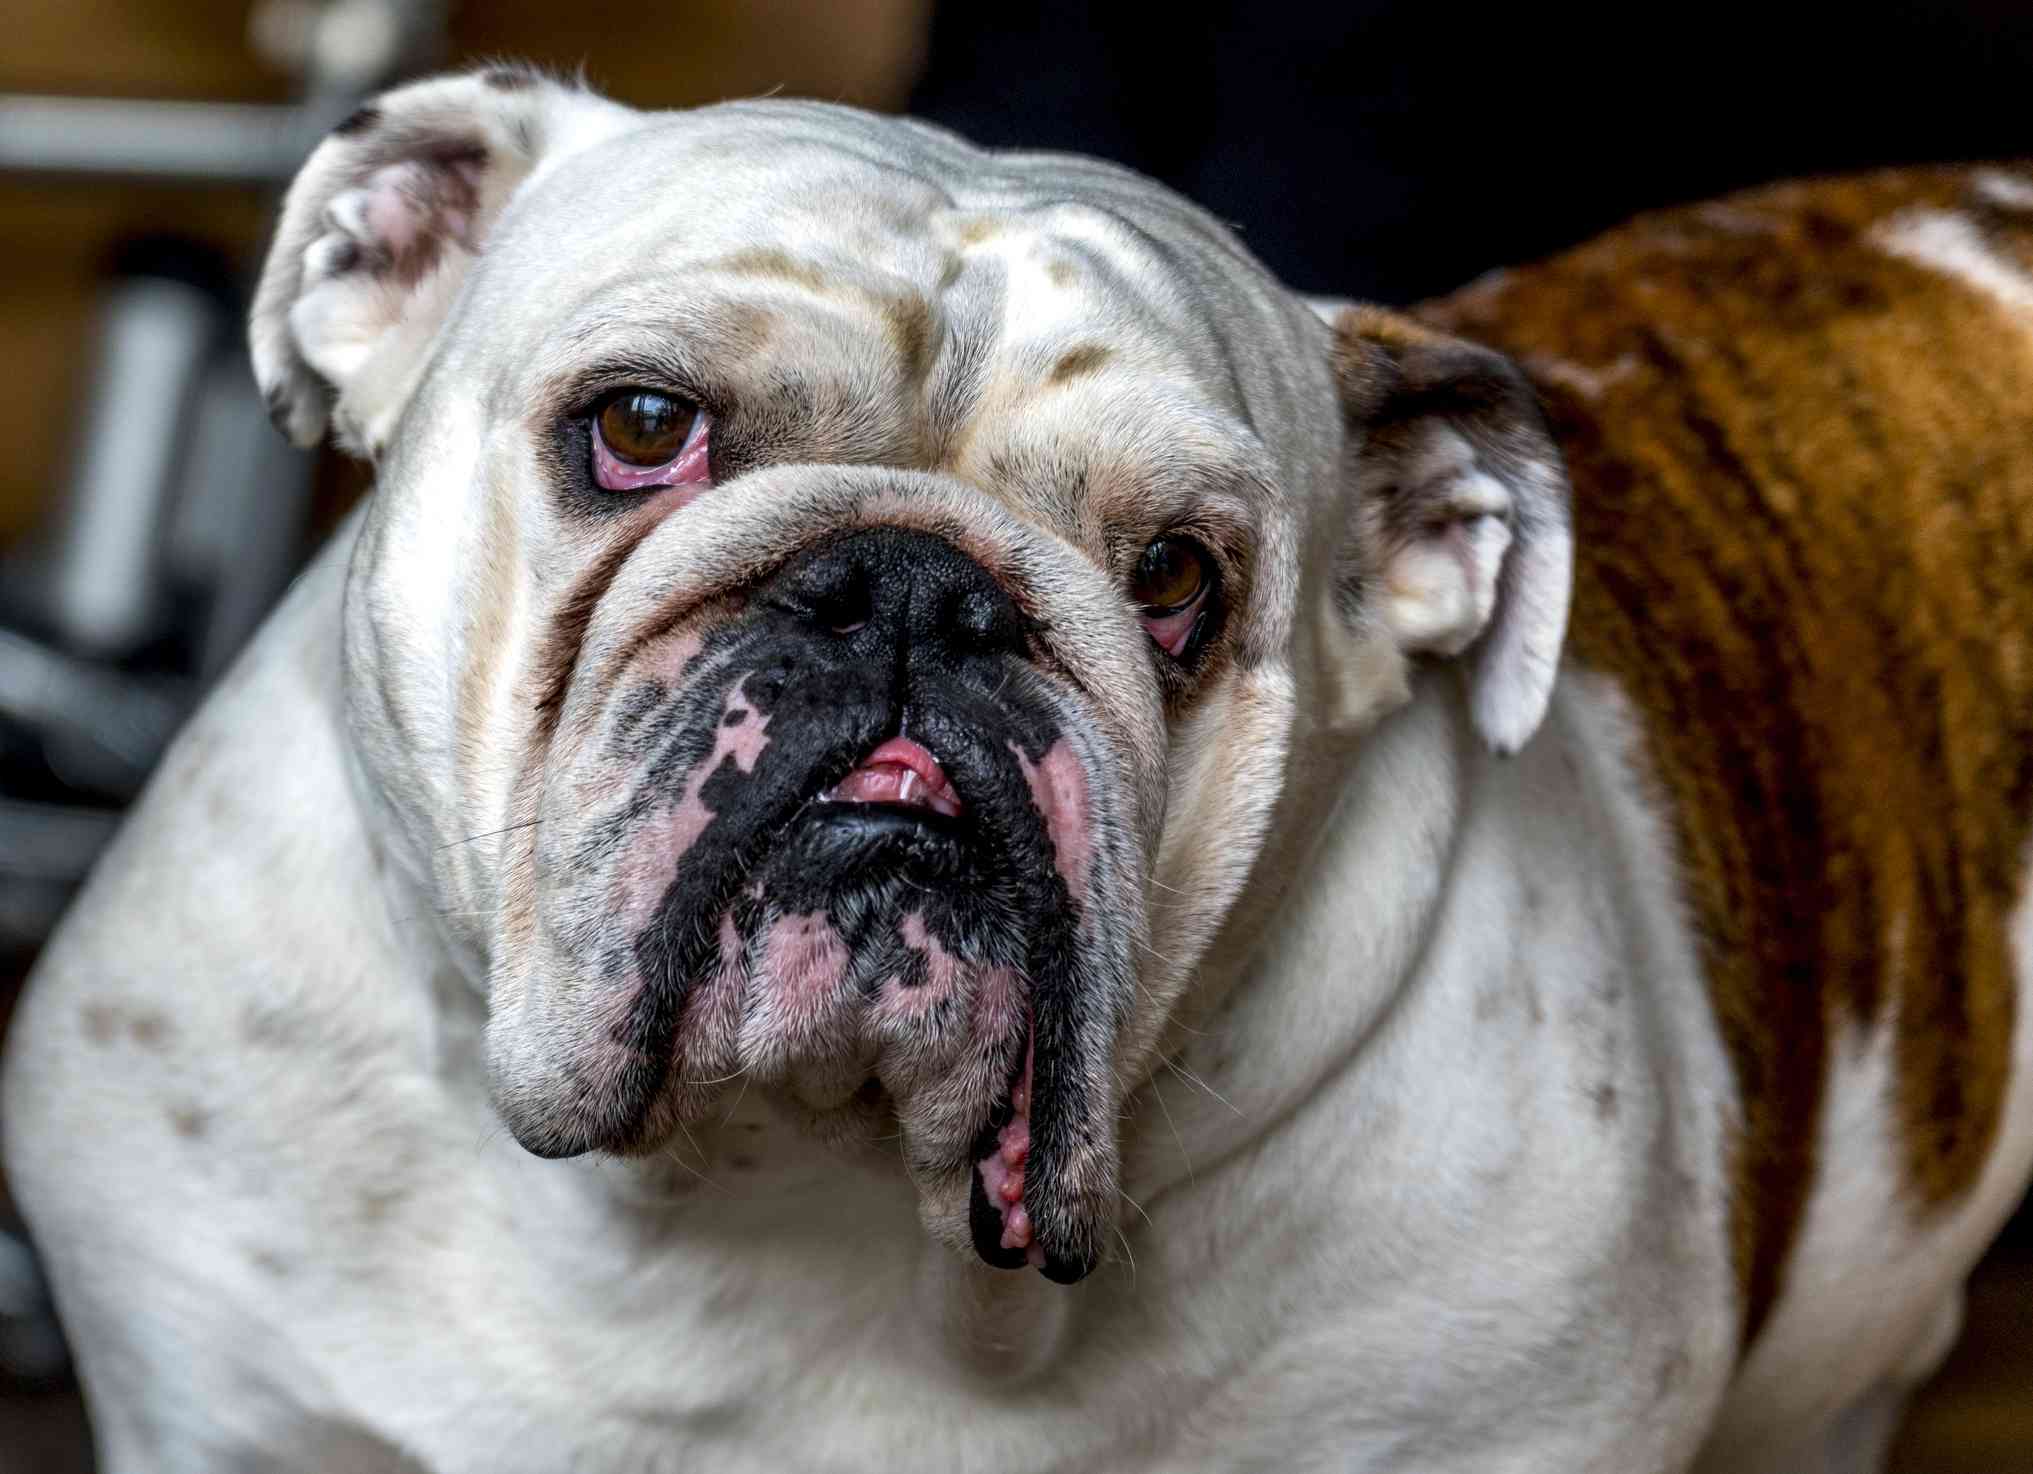 Bulldog close up of face and body